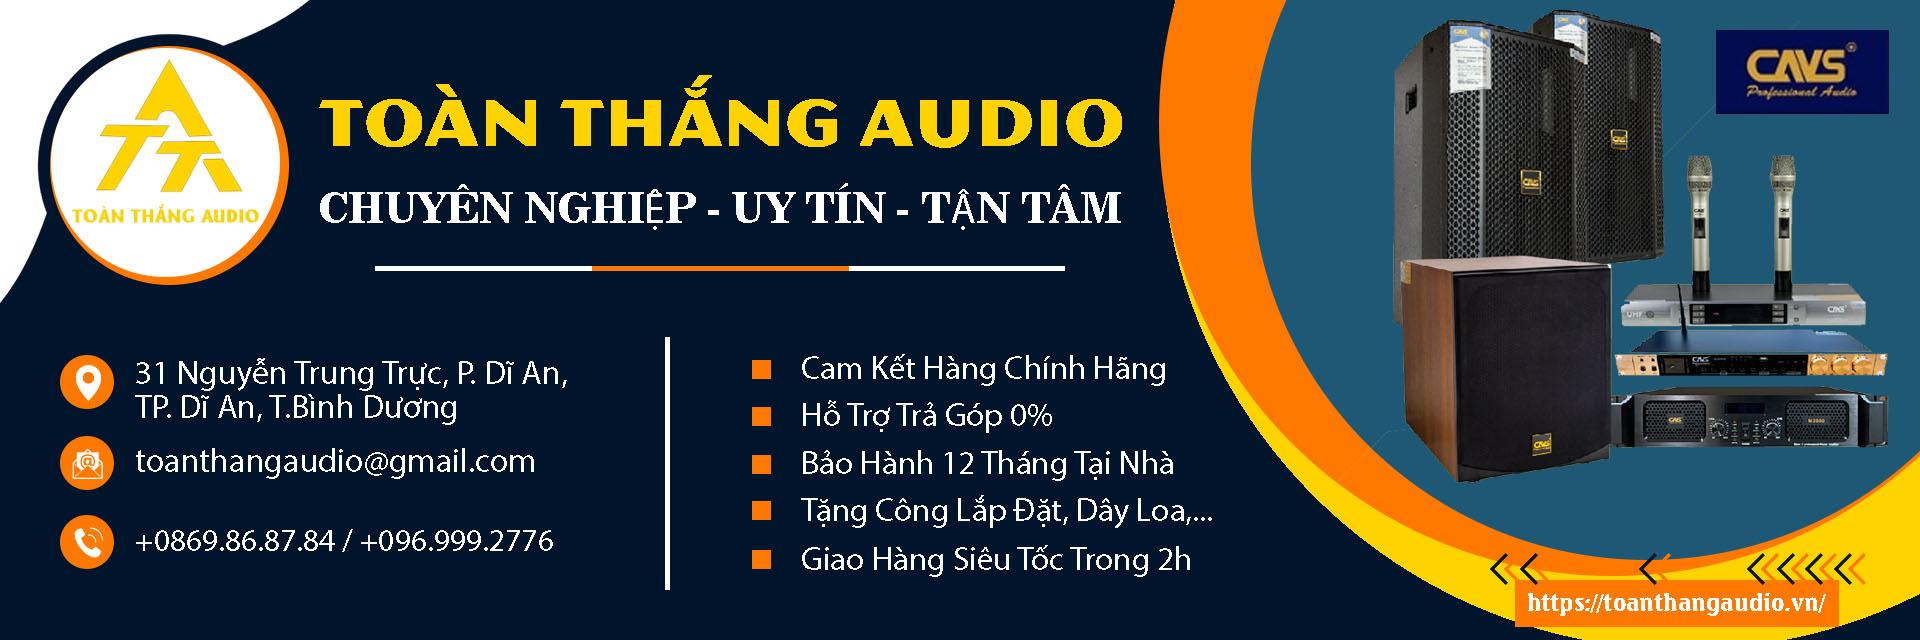 Banner Website Toàn Thắng Audio